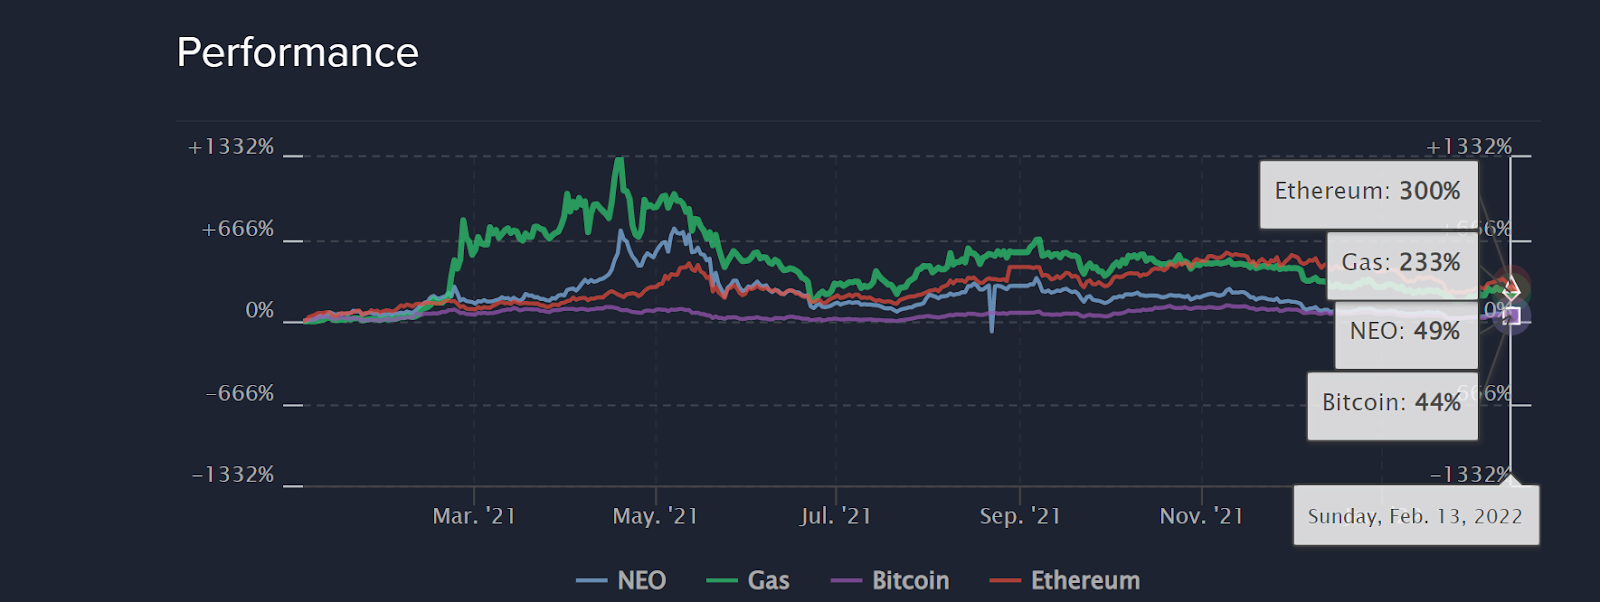 NEO, ethereum and bitcoin return comparison.